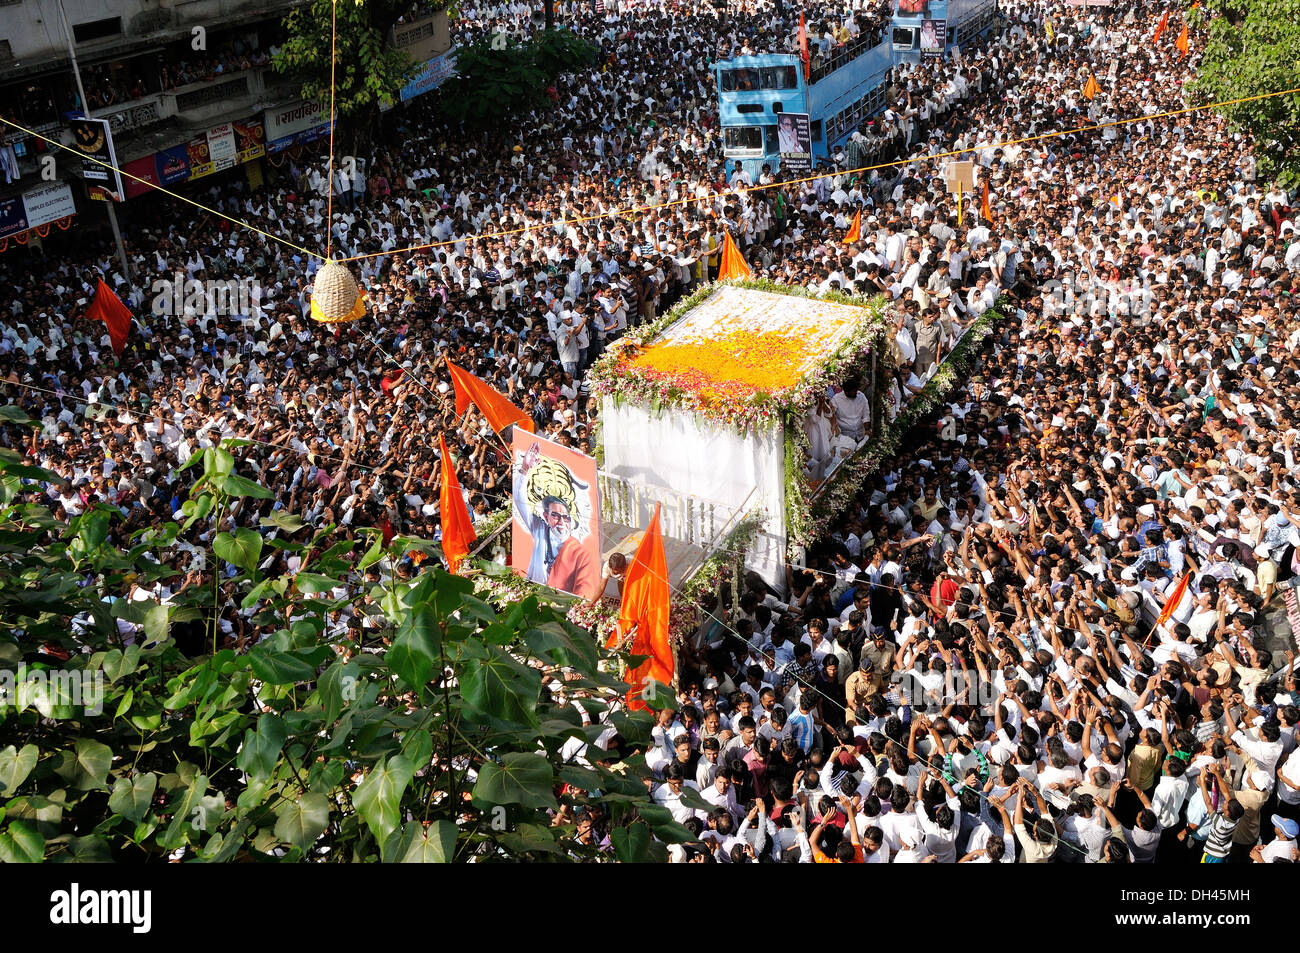 Balasaheb Thackeray Funeral Procession Crowd at Dadar mumbai maharashtra india November 2012 Stock Photo